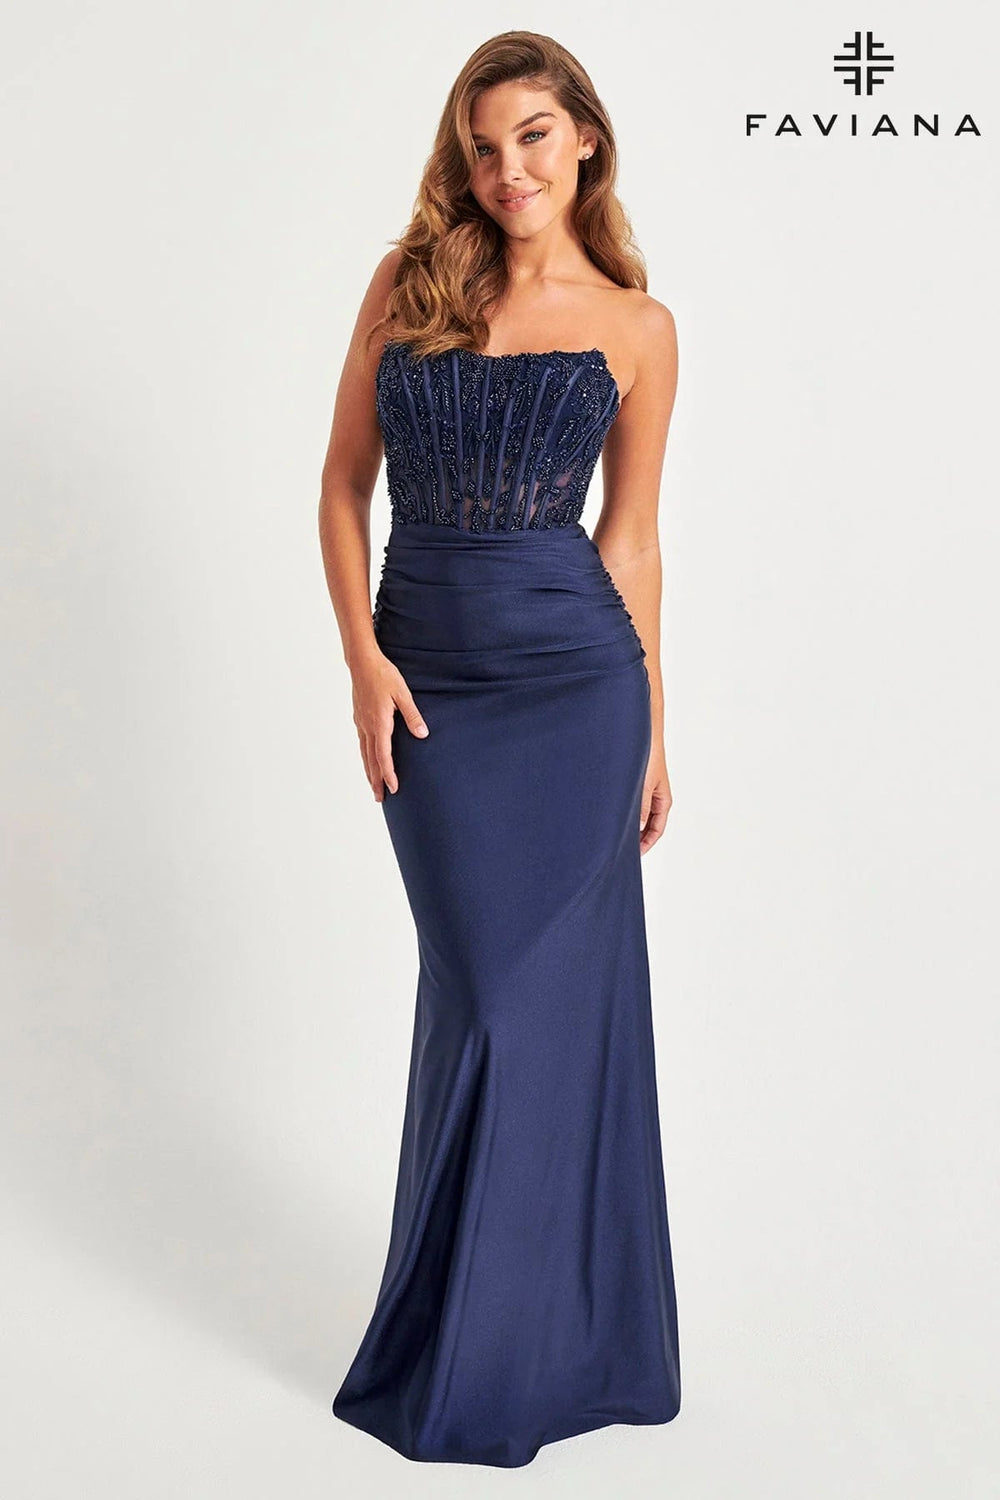 Faviana Prom Dress Faviana 11081 dress